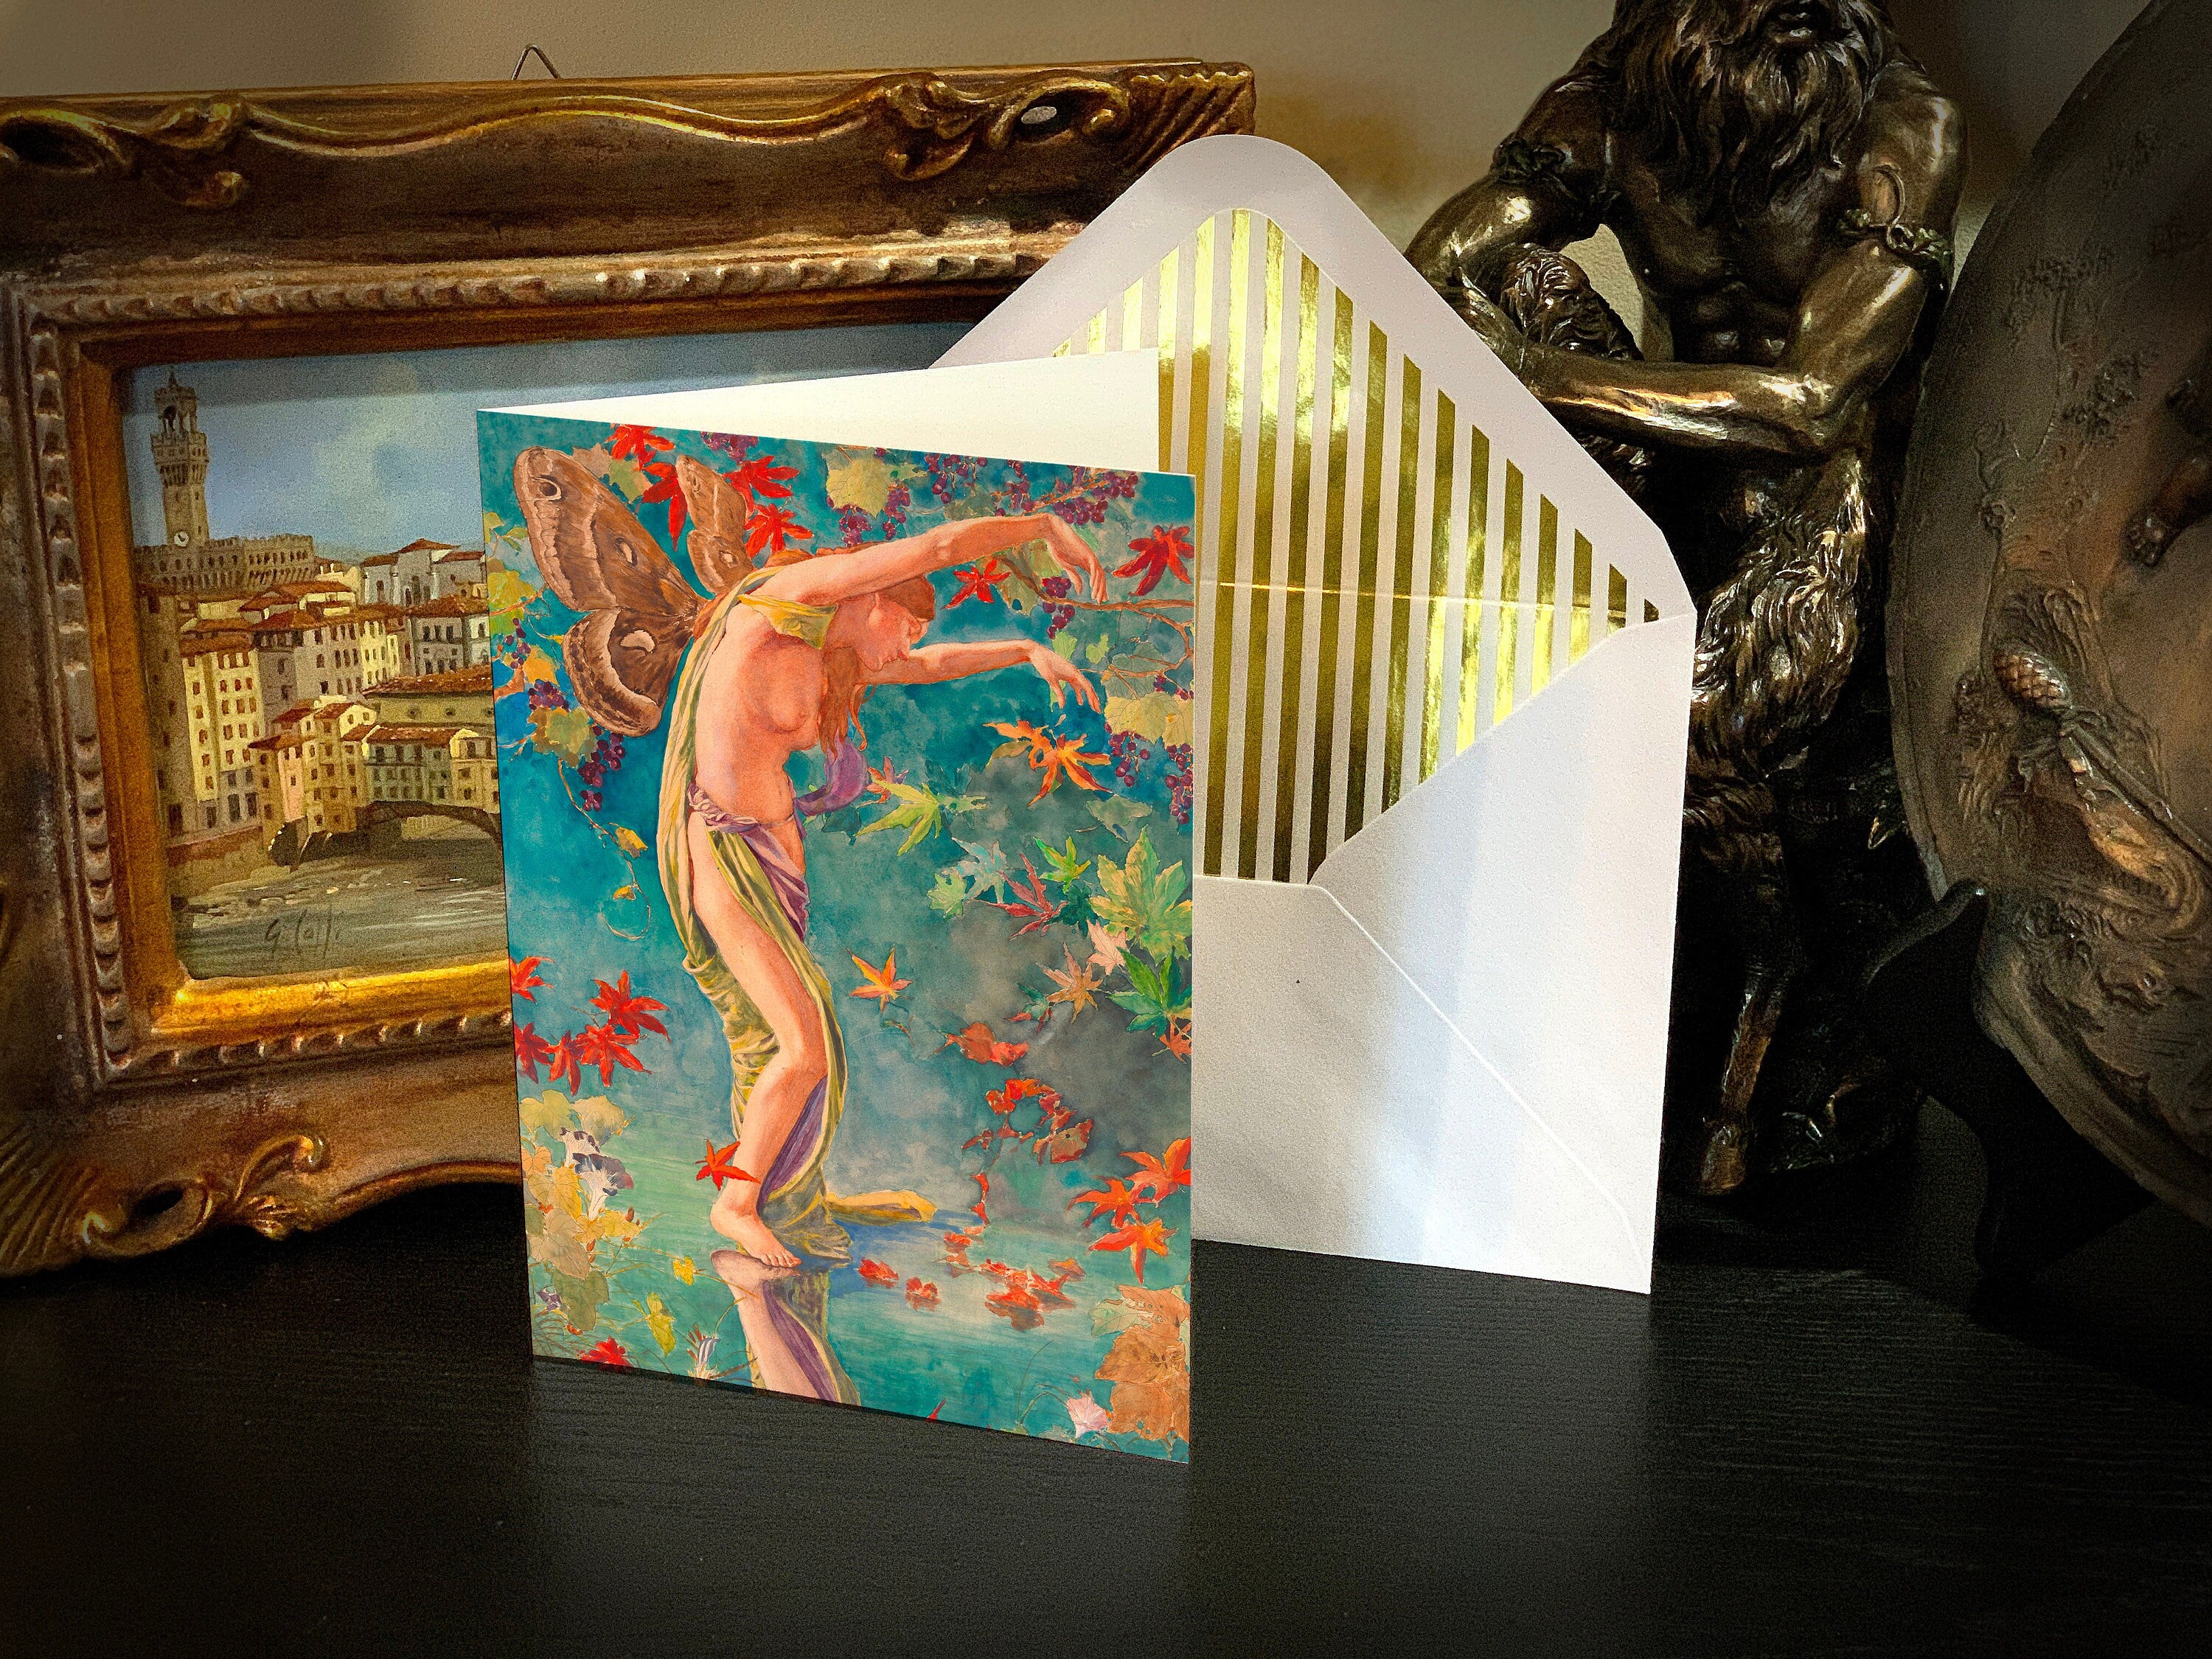 Autumn Scattering Leaves by John La Farge, Everyday Greeting Card with Elegant Striped Gold Foil Envelope, 1 Card/Envelope